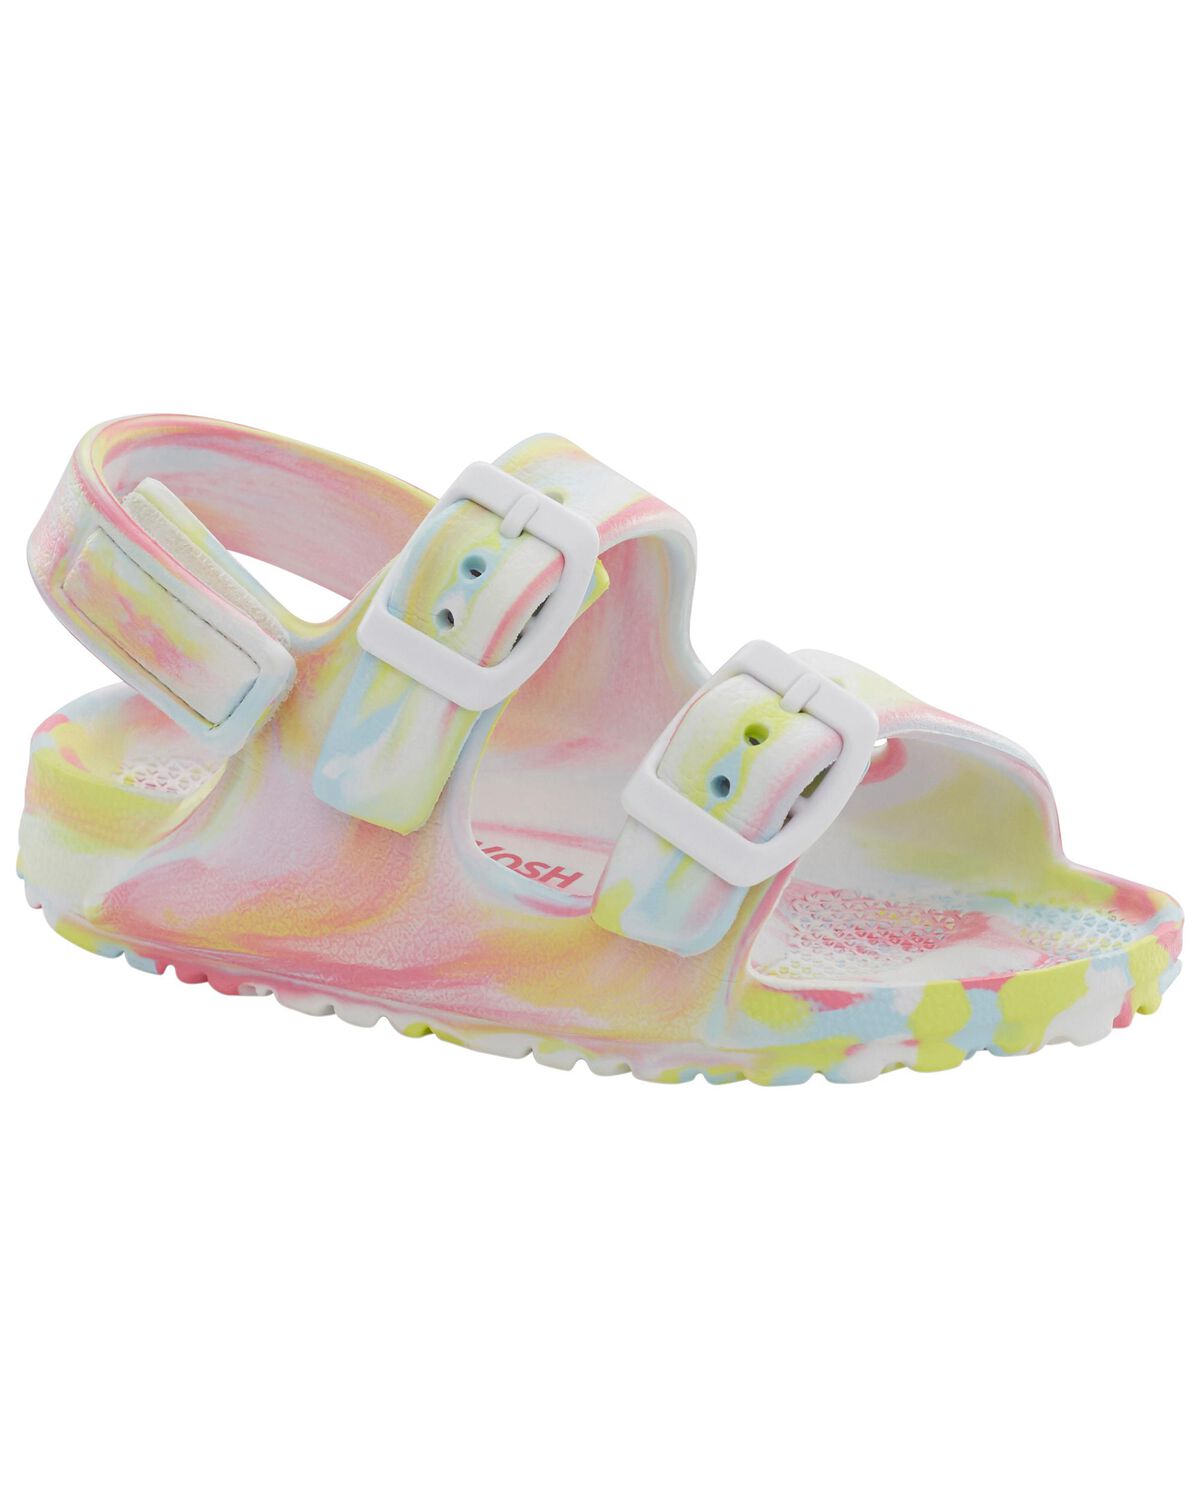 Multi Toddler Casual Sandals | carters.com